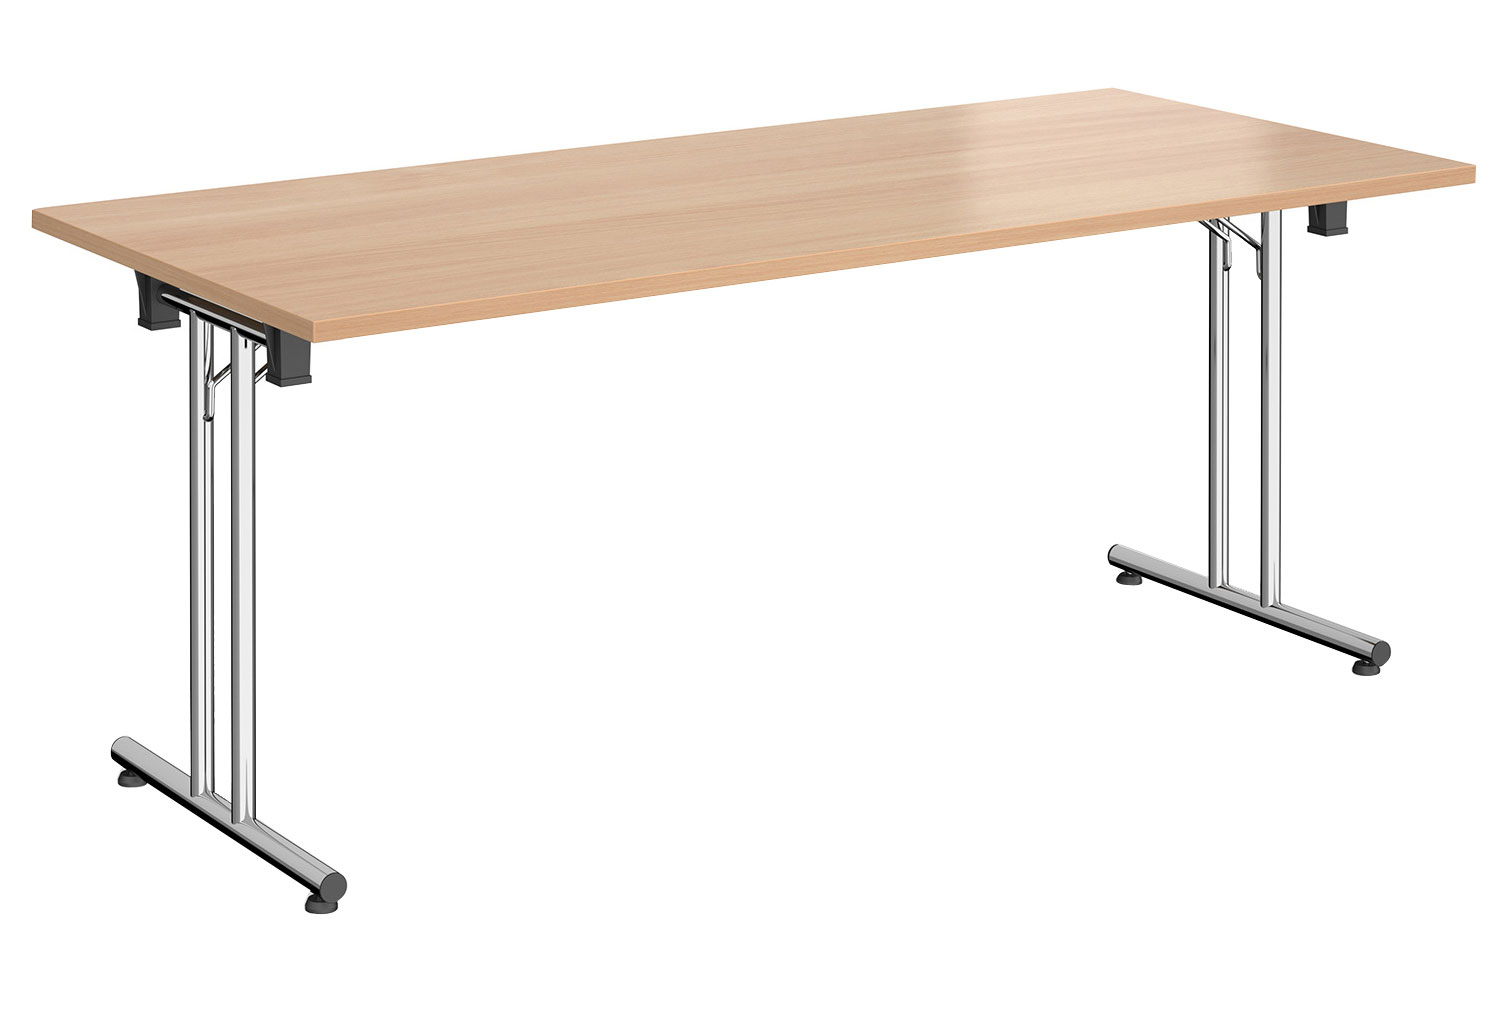 Adson Rectangular Folding Table, 180wx80dx73h (cm), Beech